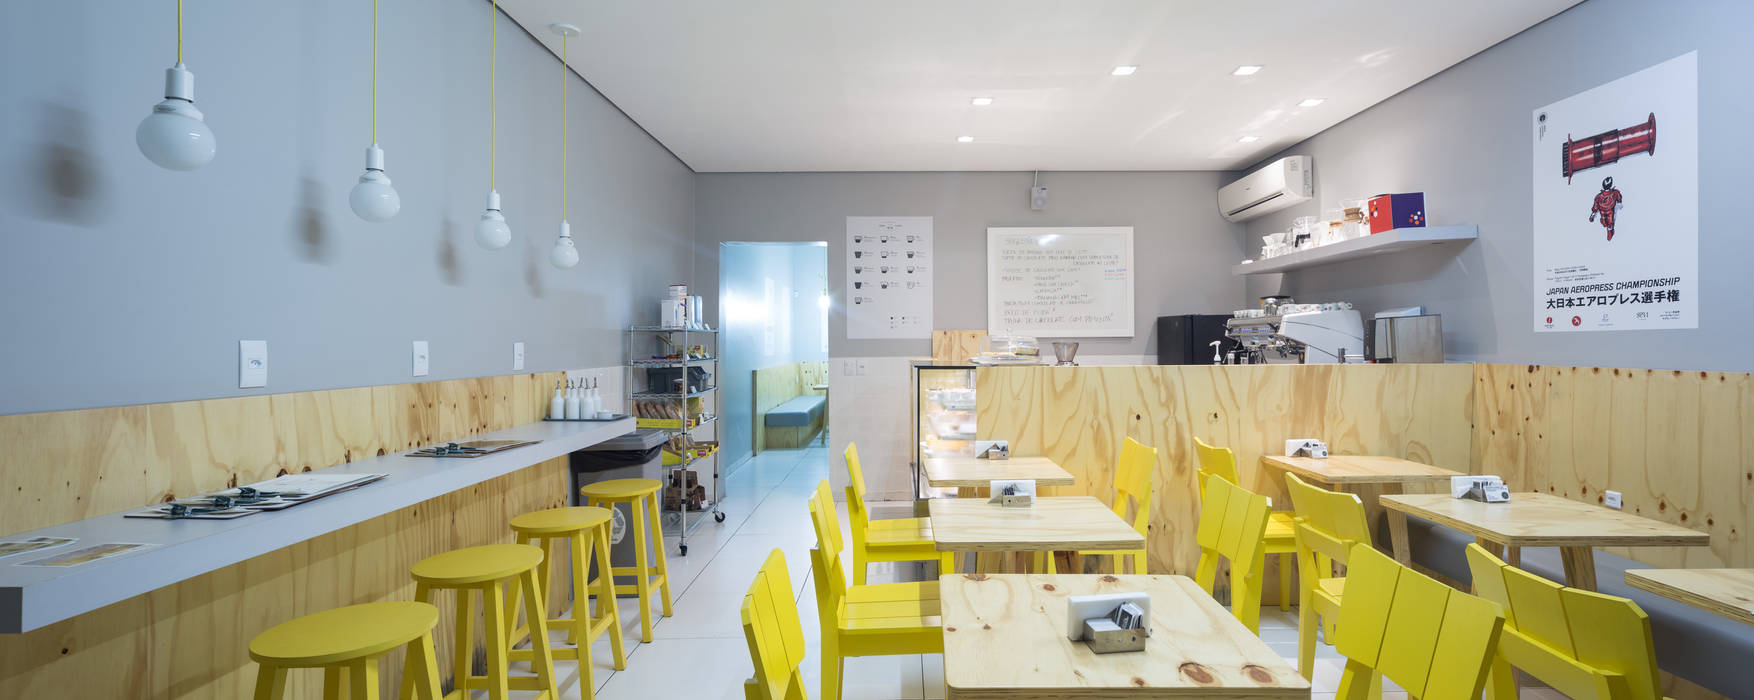 Restaurante - 2014 - Yami Café, Kali Arquitetura Kali Arquitetura 商业空间 餐廳